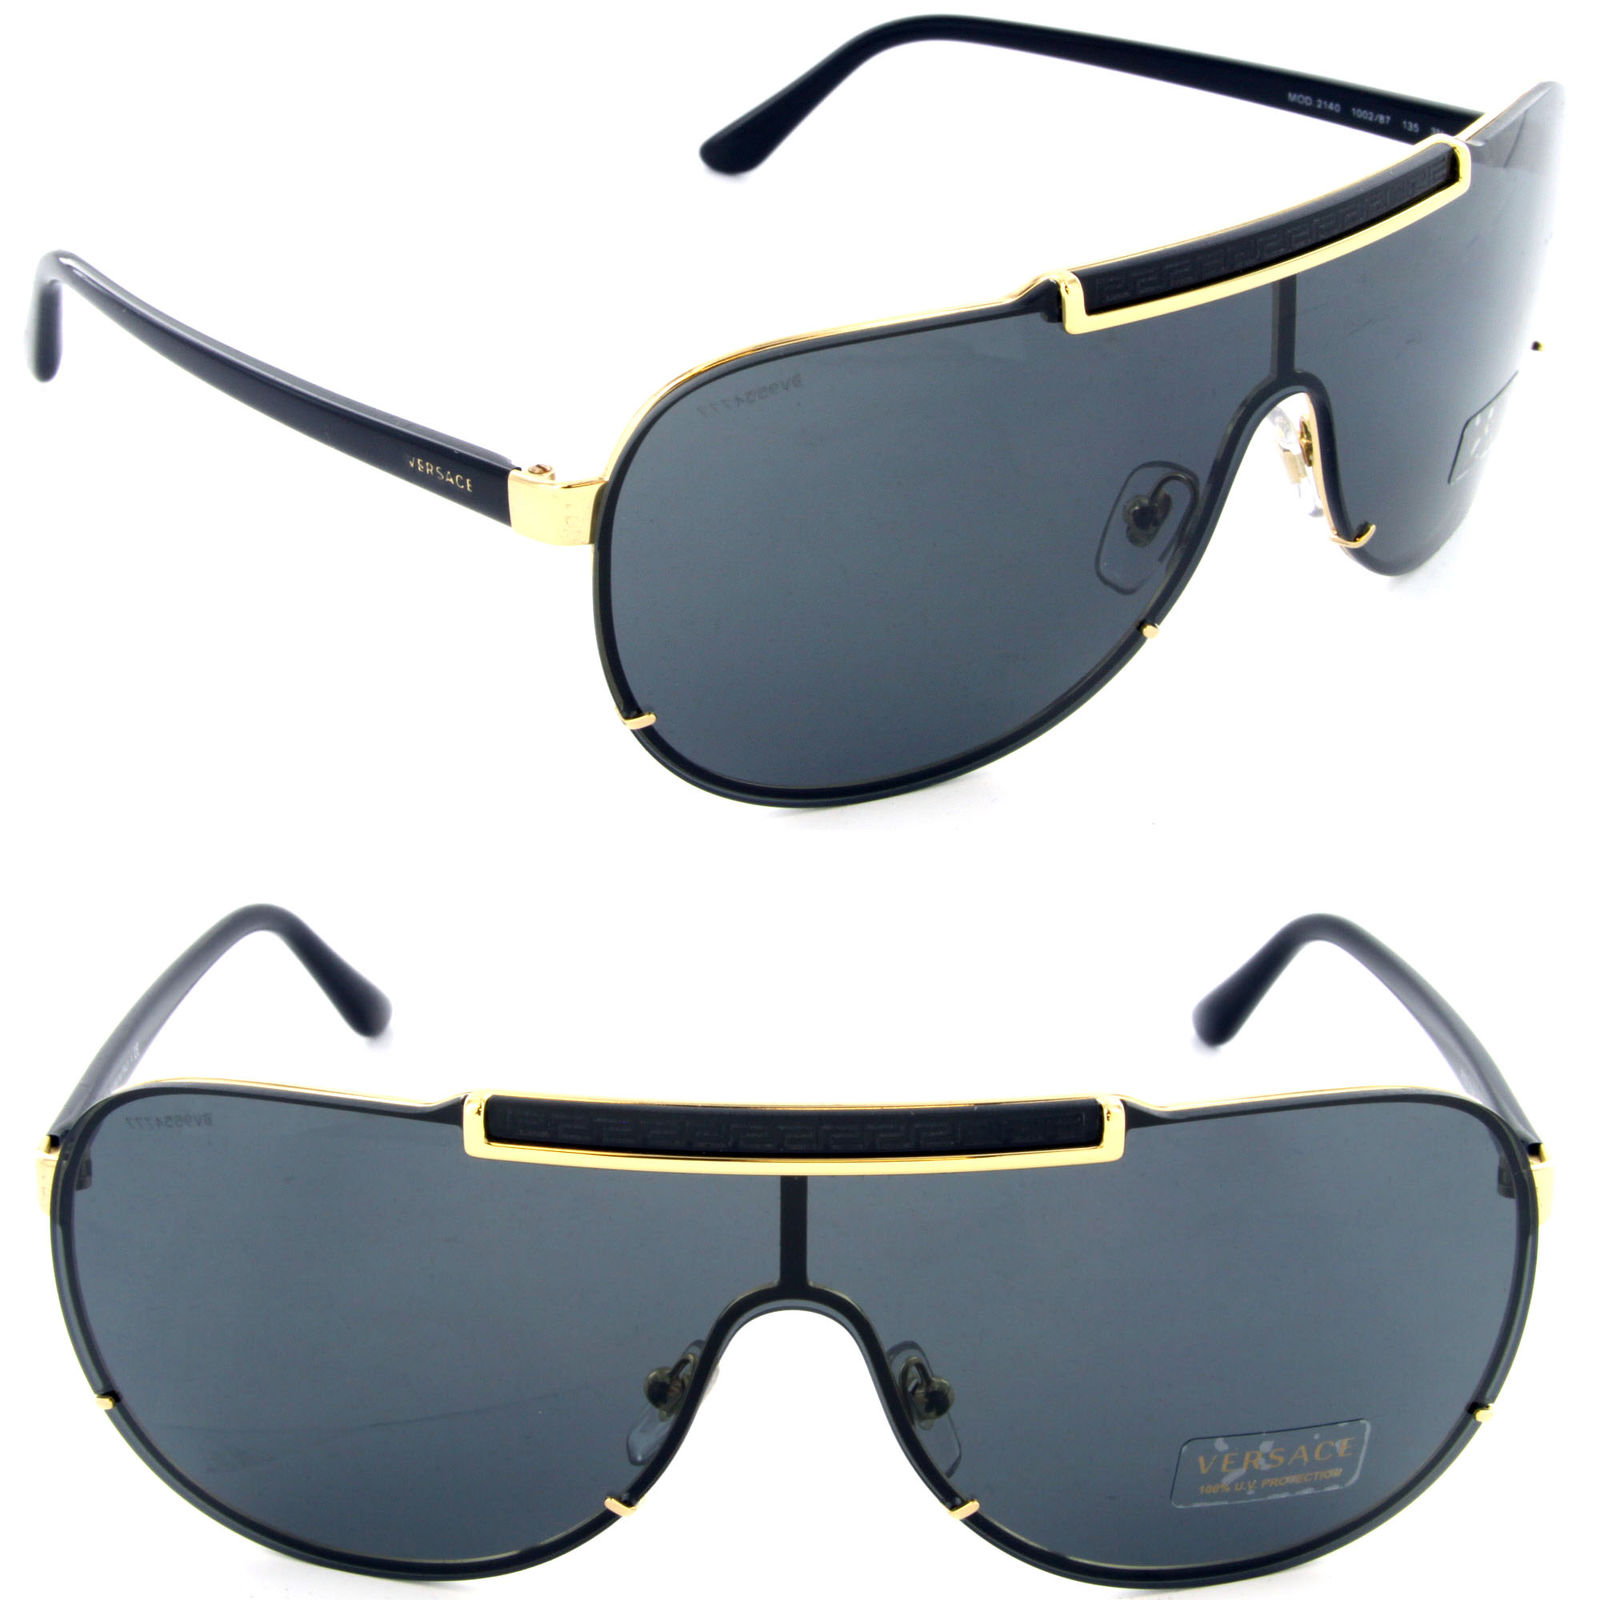 ve2140 sunglasses